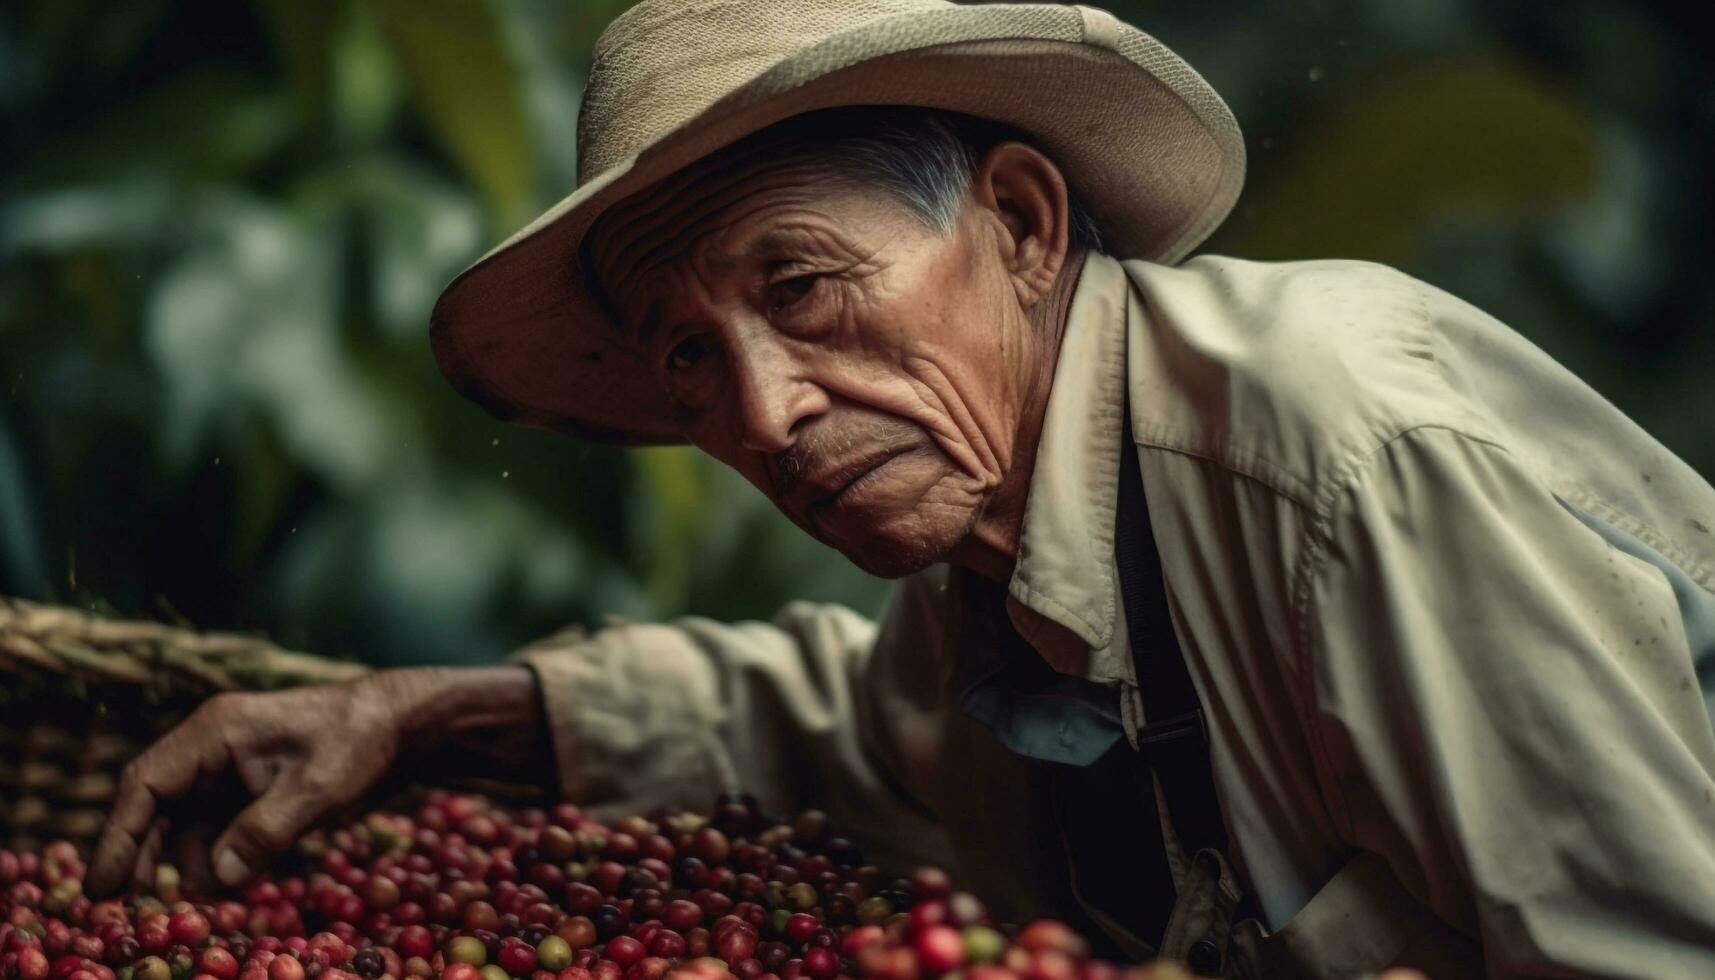 Senior adult farmer harvesting ripe fruit in an organic farm generated by AI photo